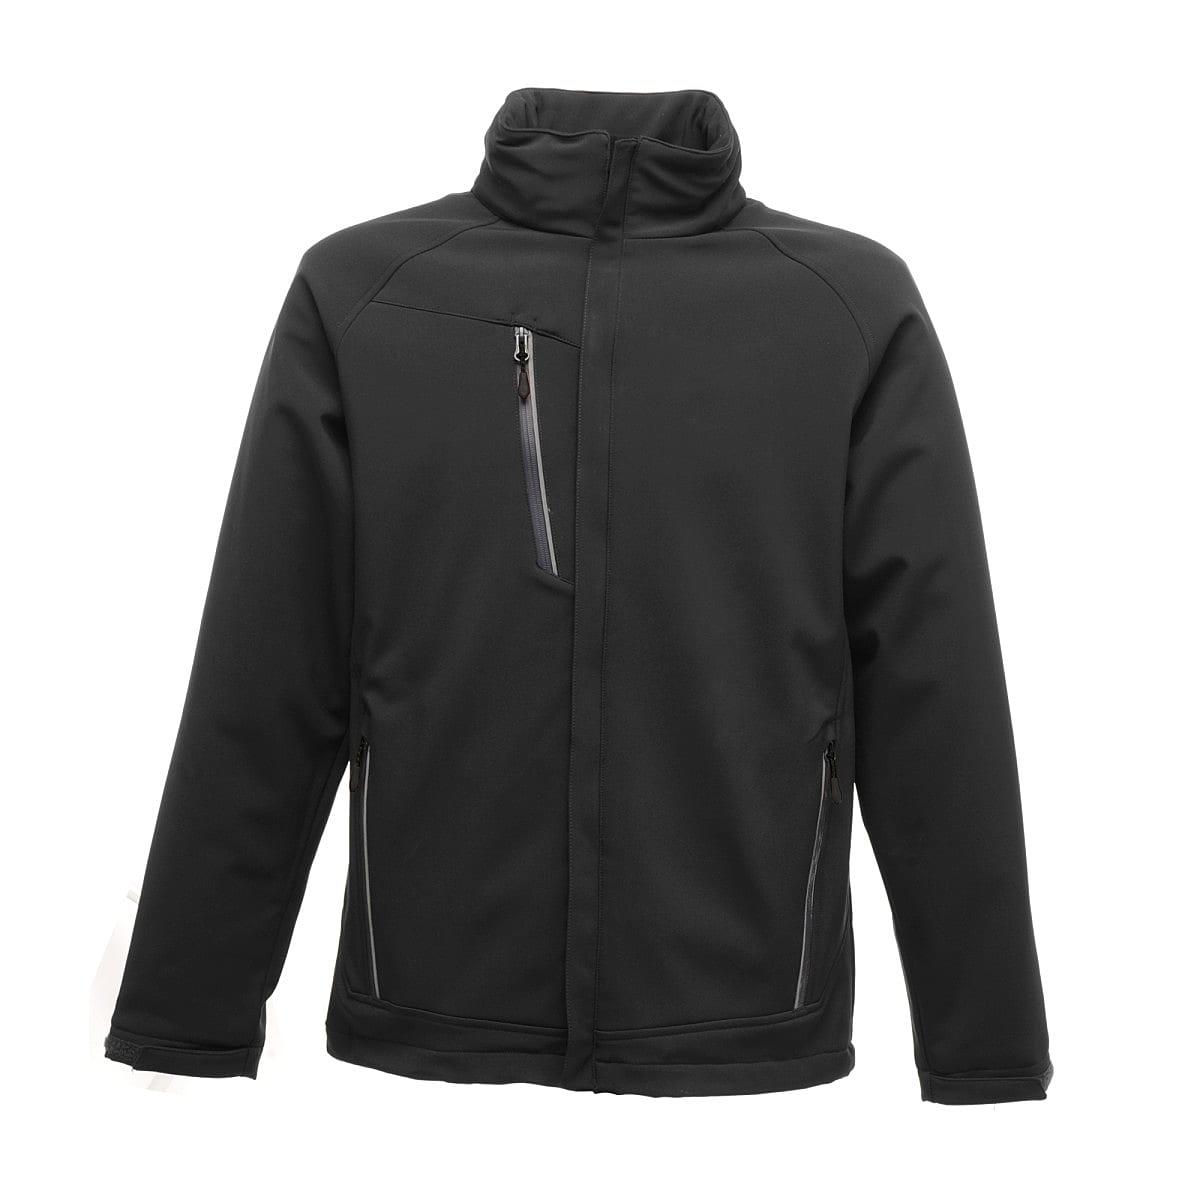 Regatta Apex Waterproof Softshell Jacket in Black (Product Code: TRA670)